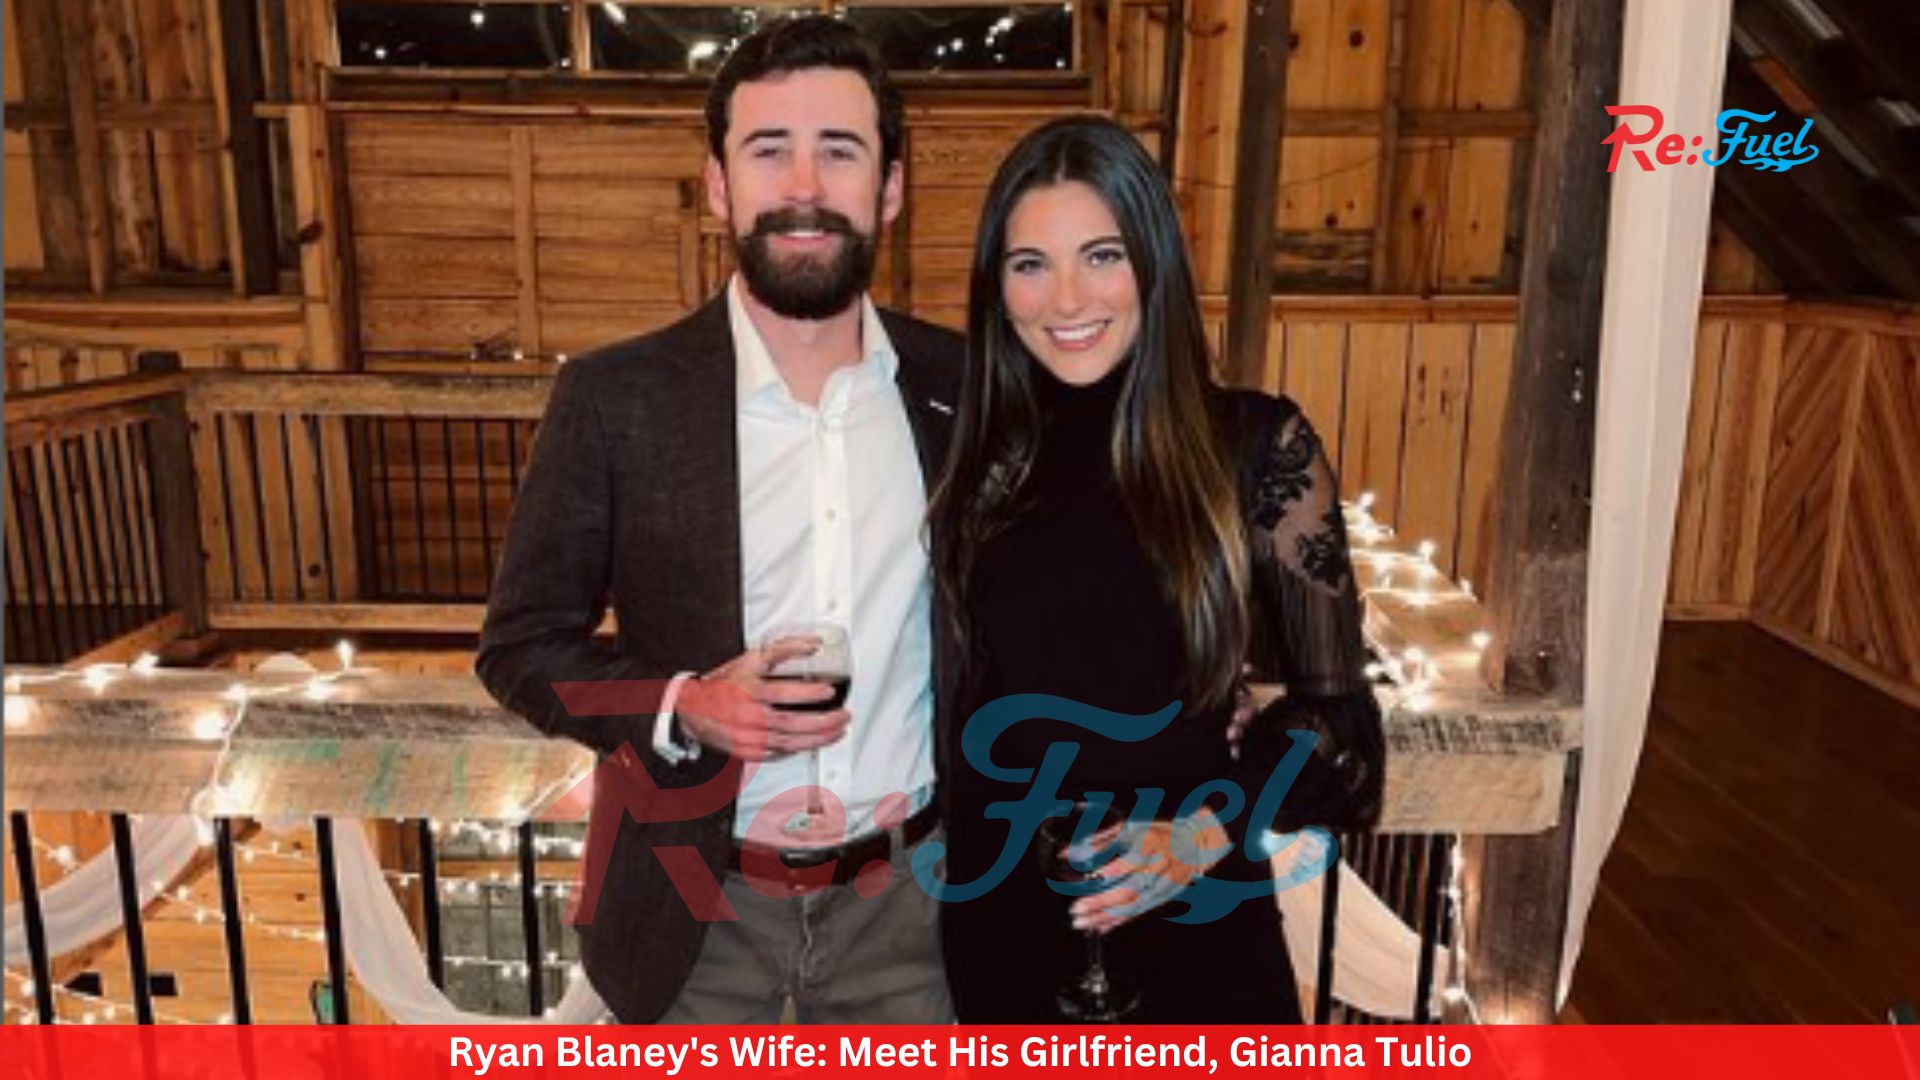 Ryan Blaney's Wife: Meet His Girlfriend, Gianna Tulio